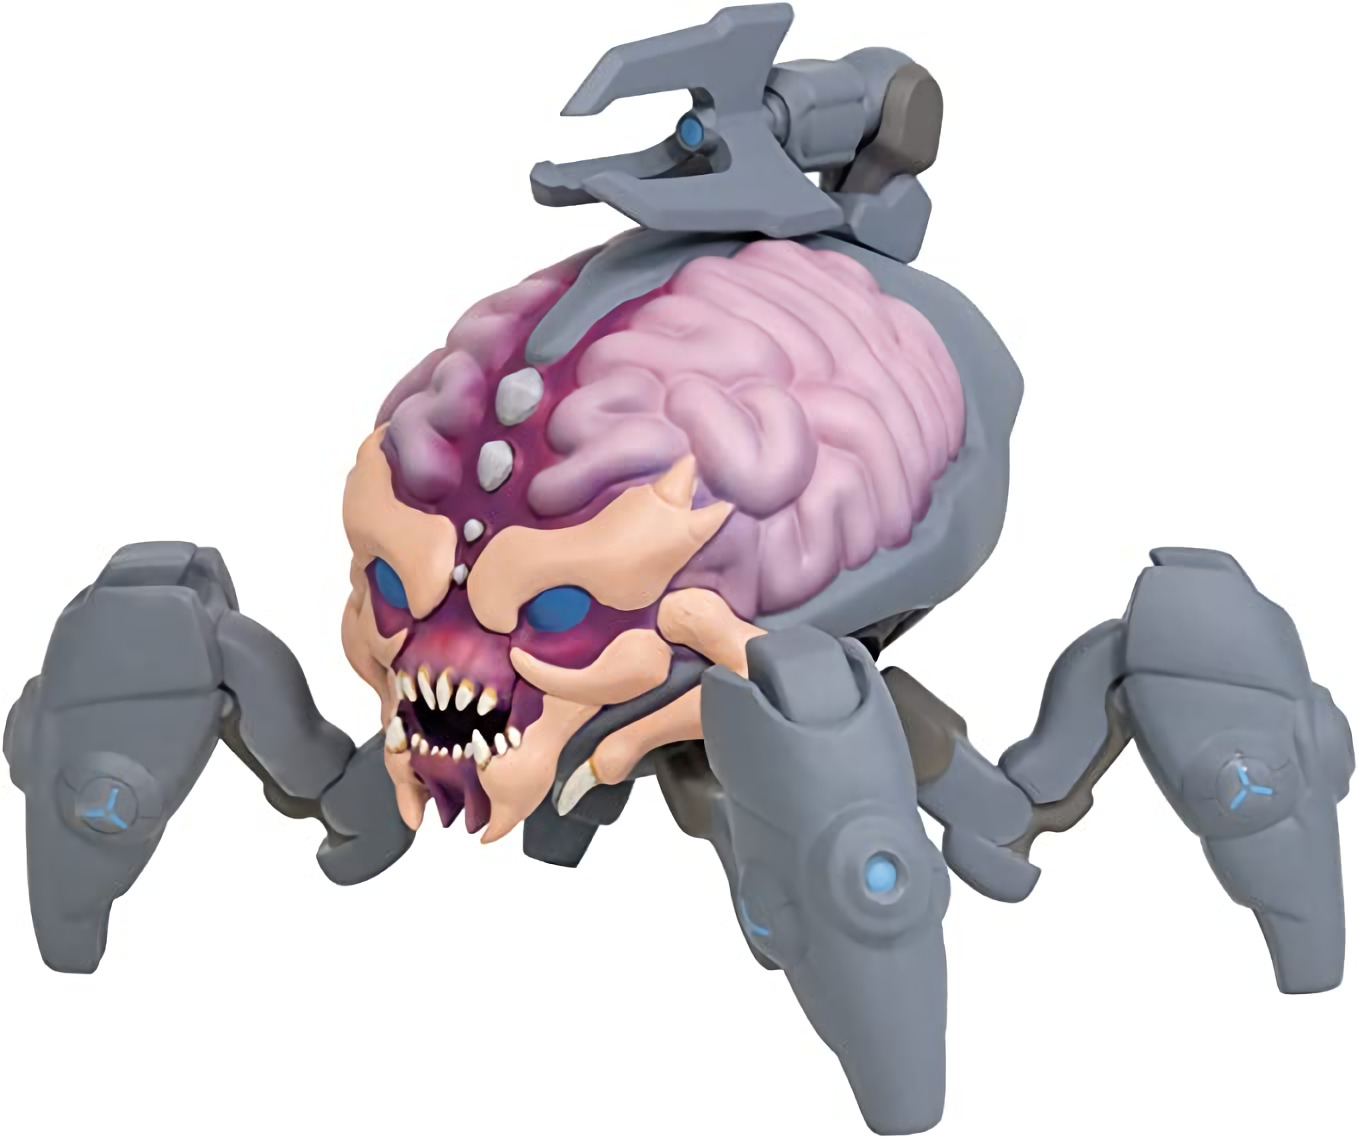 Figurka Doom - Arachnotron (Numskull) (poškozený obal)